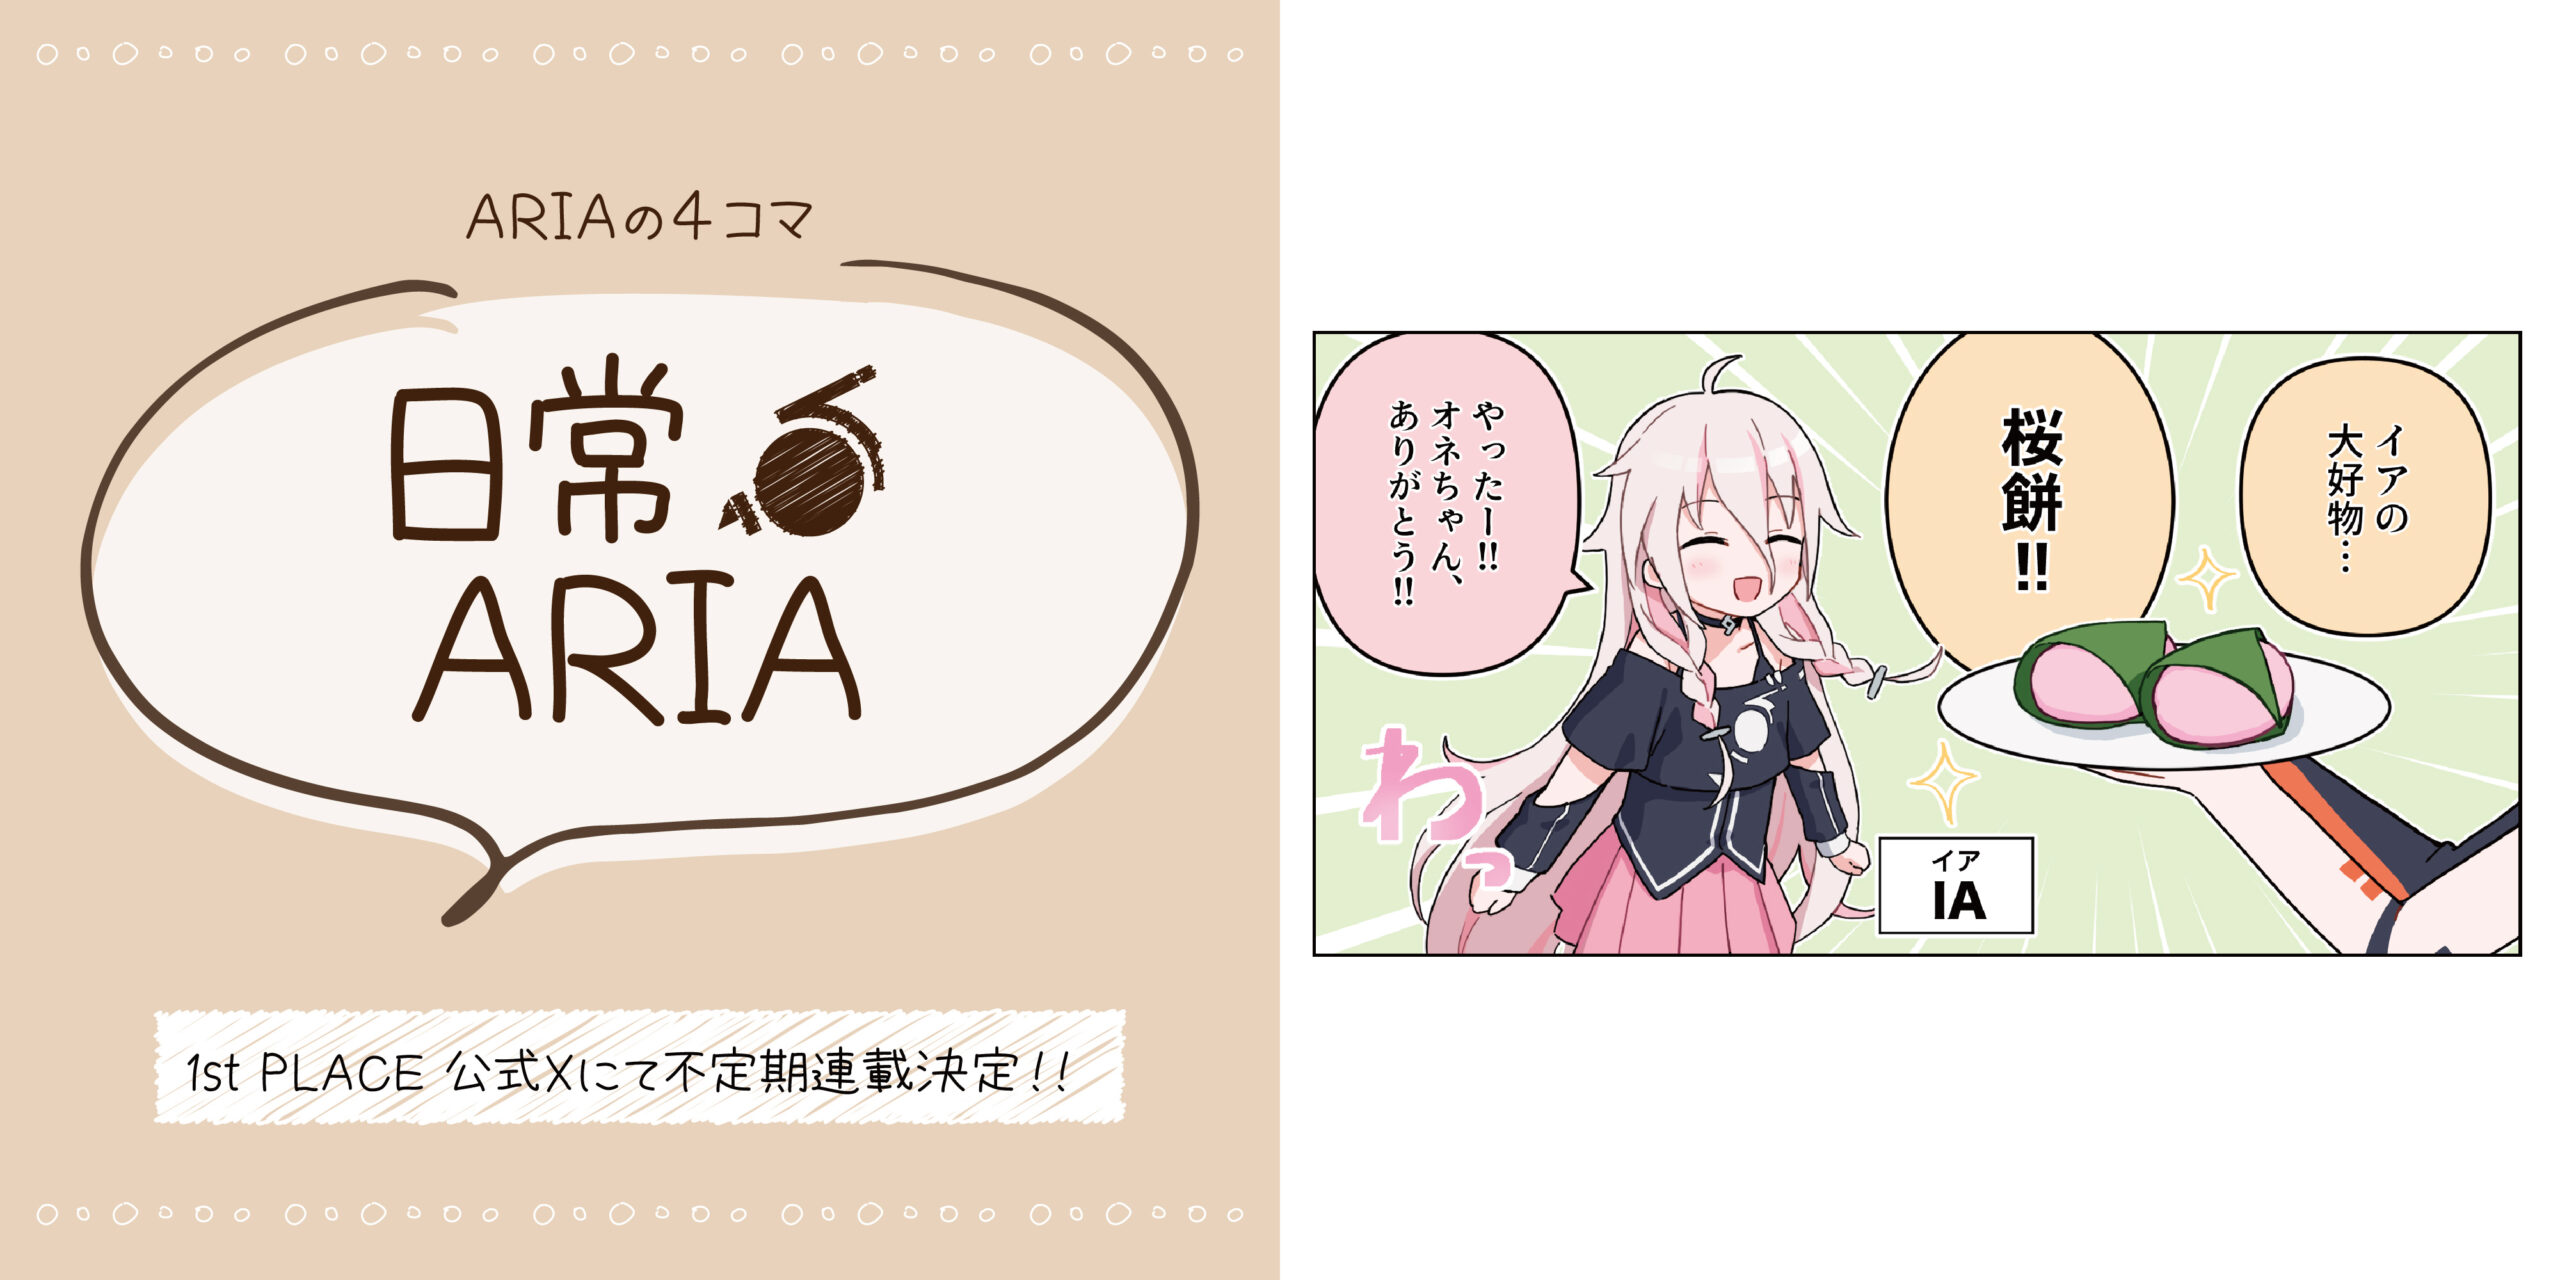 ARIA 4コマ漫画 “日常ARIA” 不定期連載開始!!